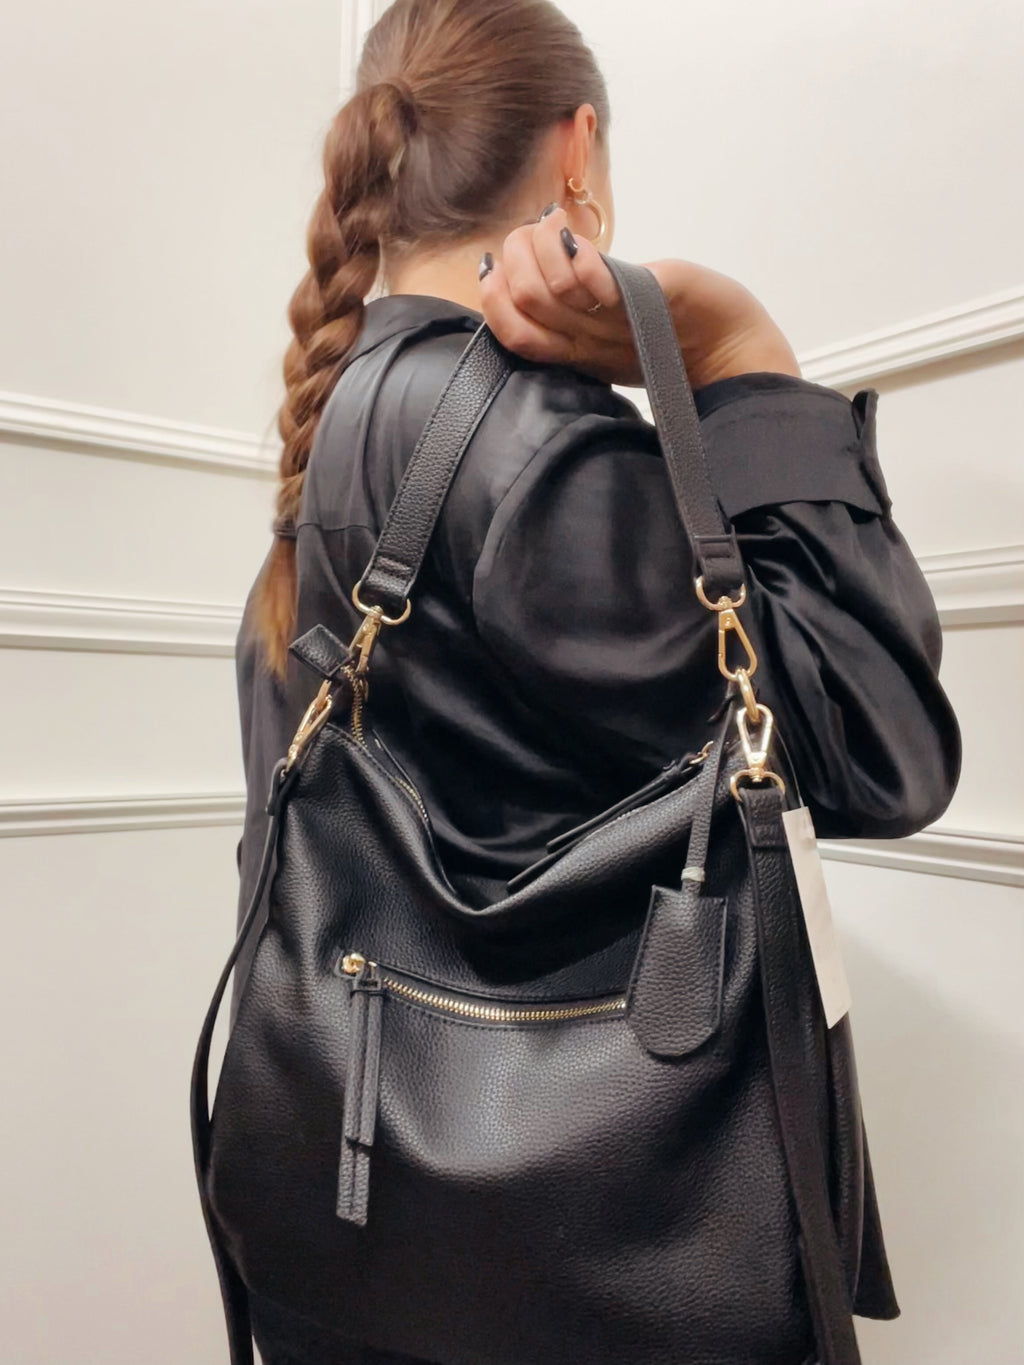  Fossil Women's Jolie Leather Hobo Purse Handbag, Black